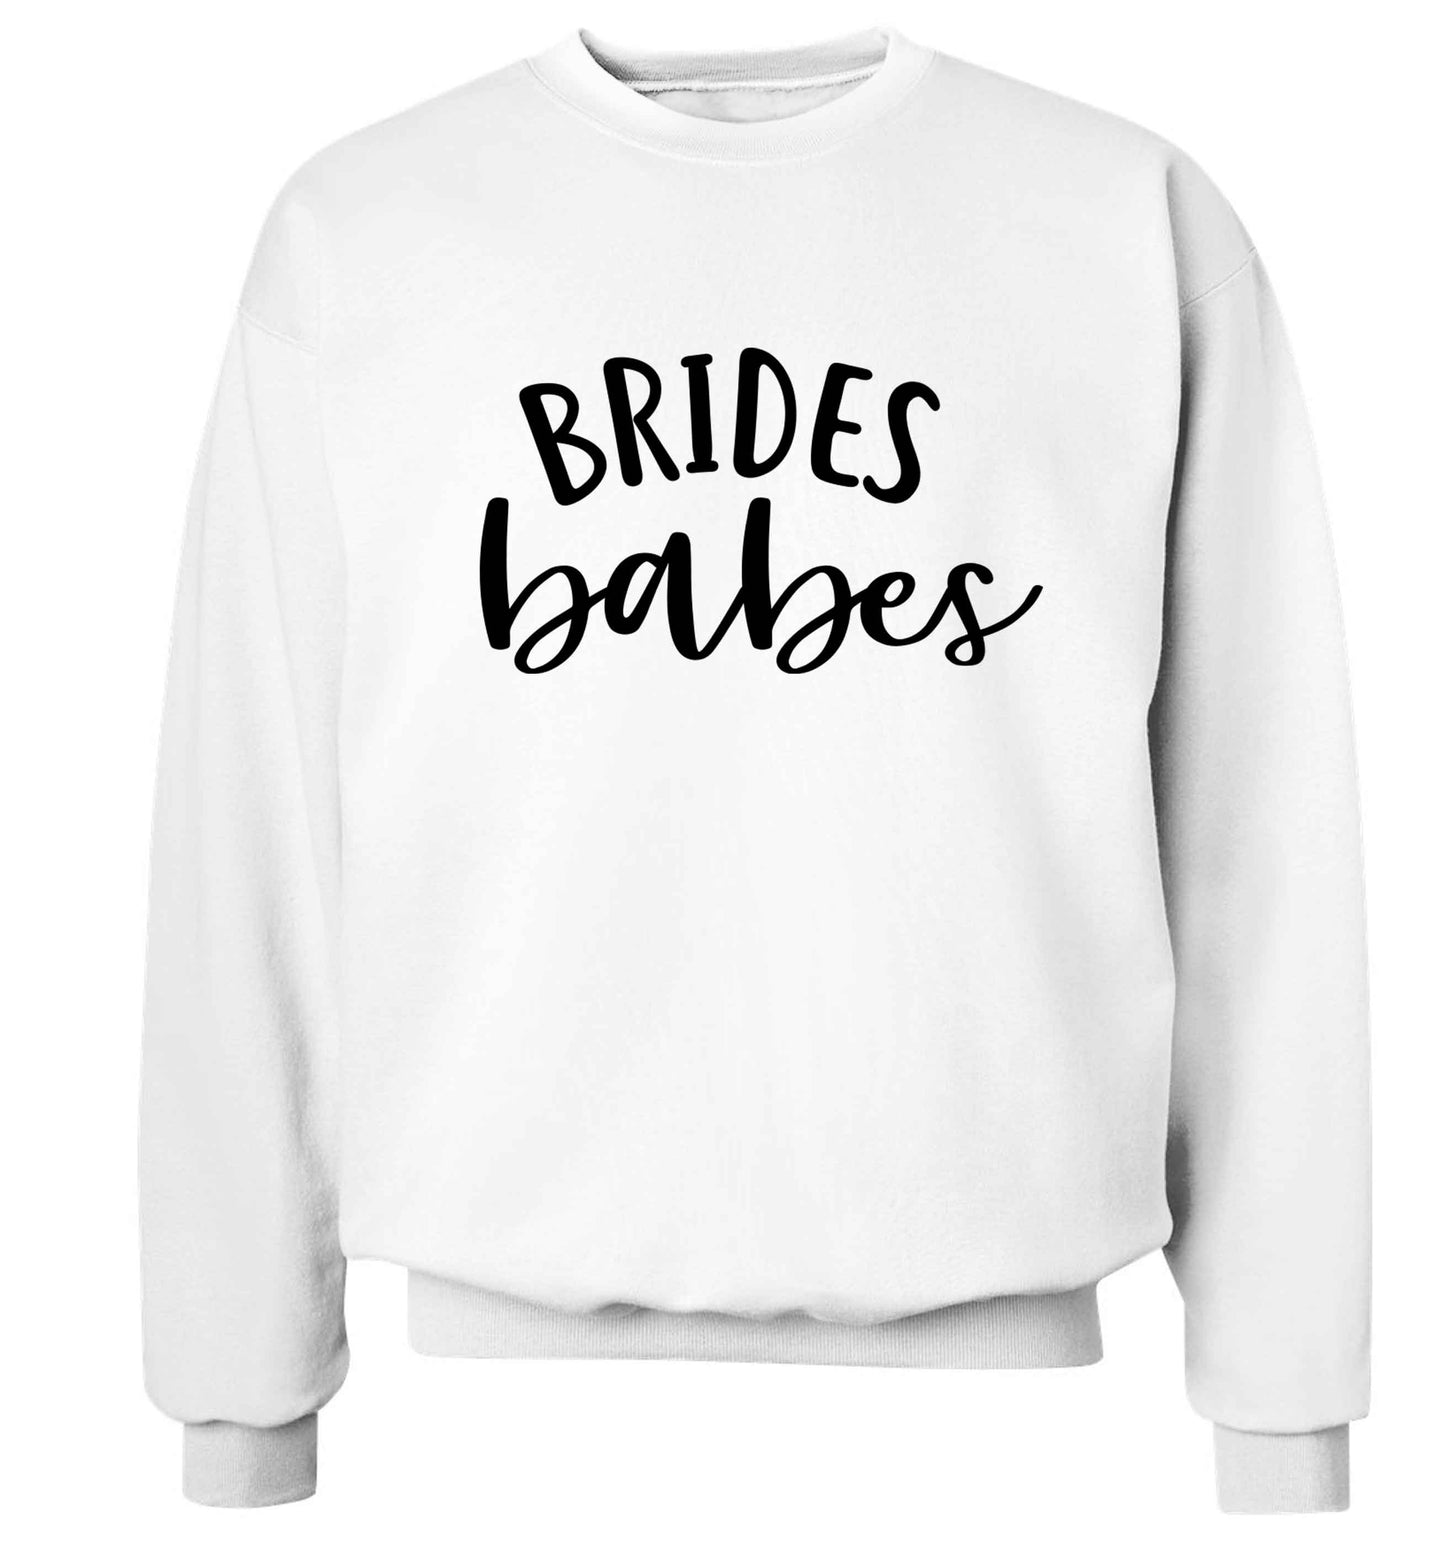 Brides Babes Adult's unisex white Sweater 2XL